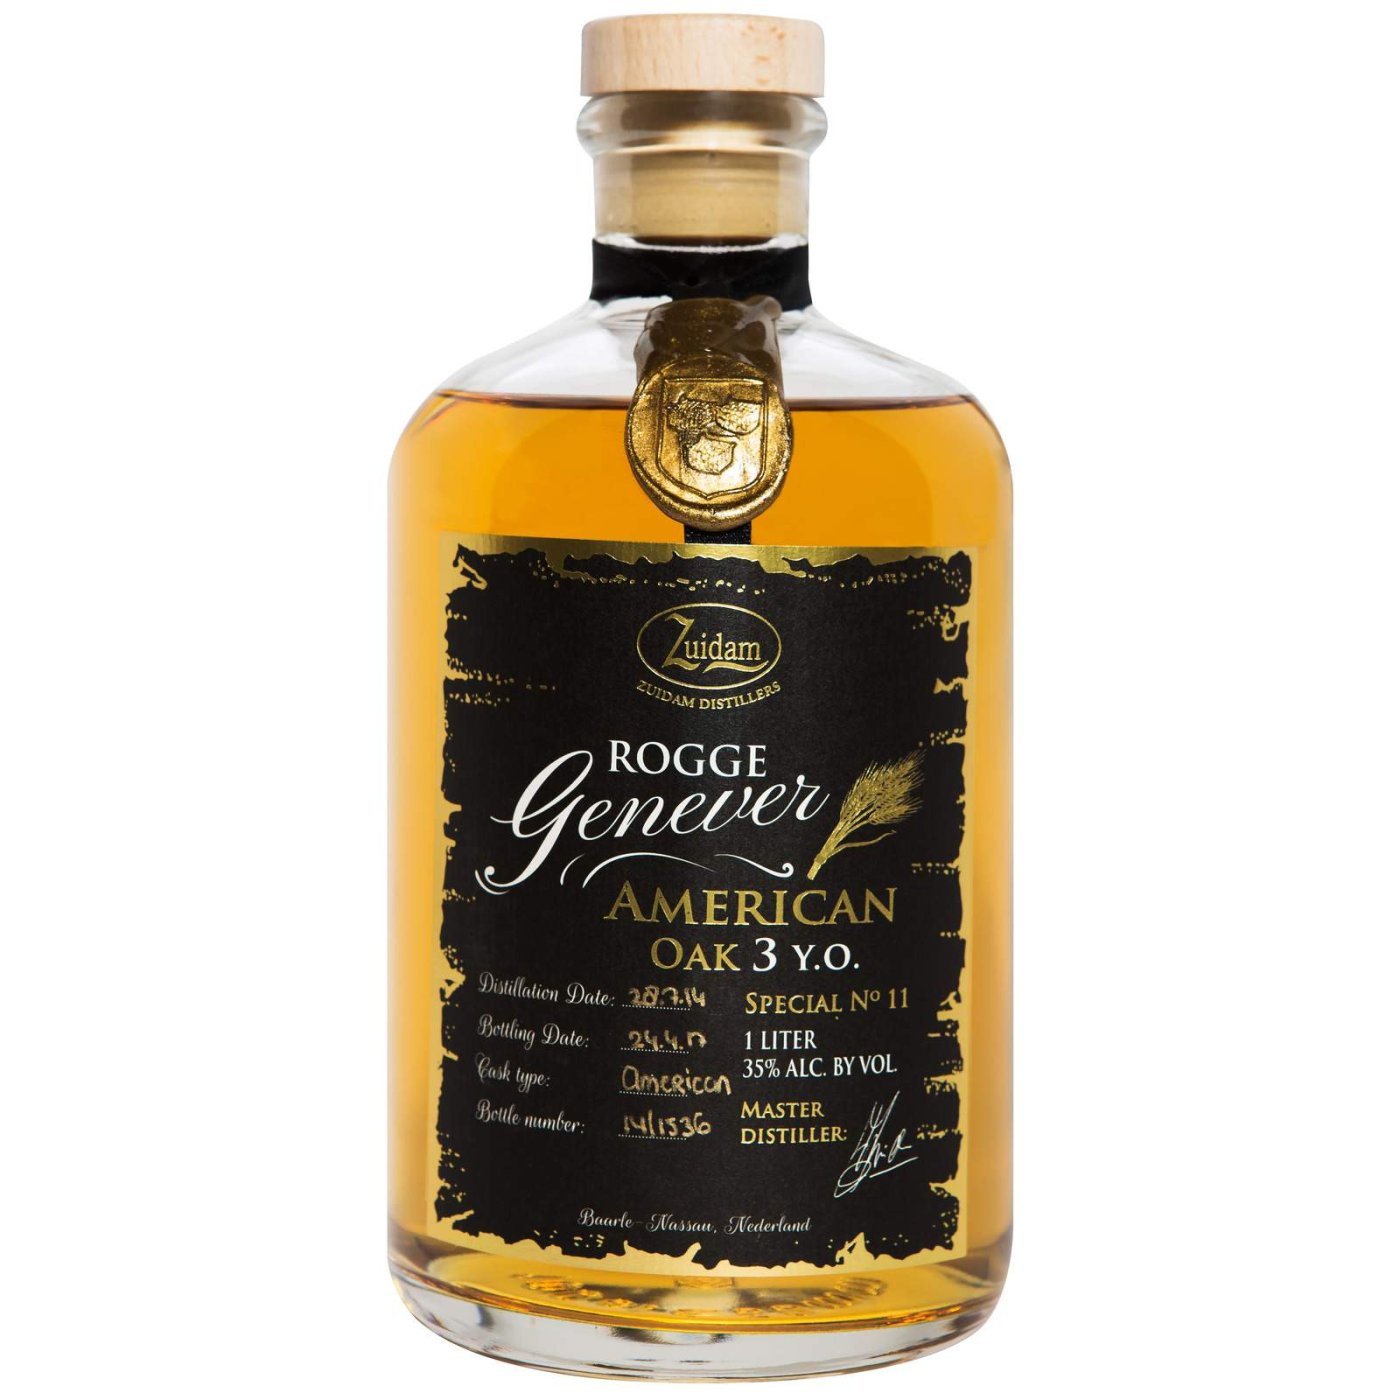 Zuidam - Rogge Genever, 3 Y American Oak 1 liter